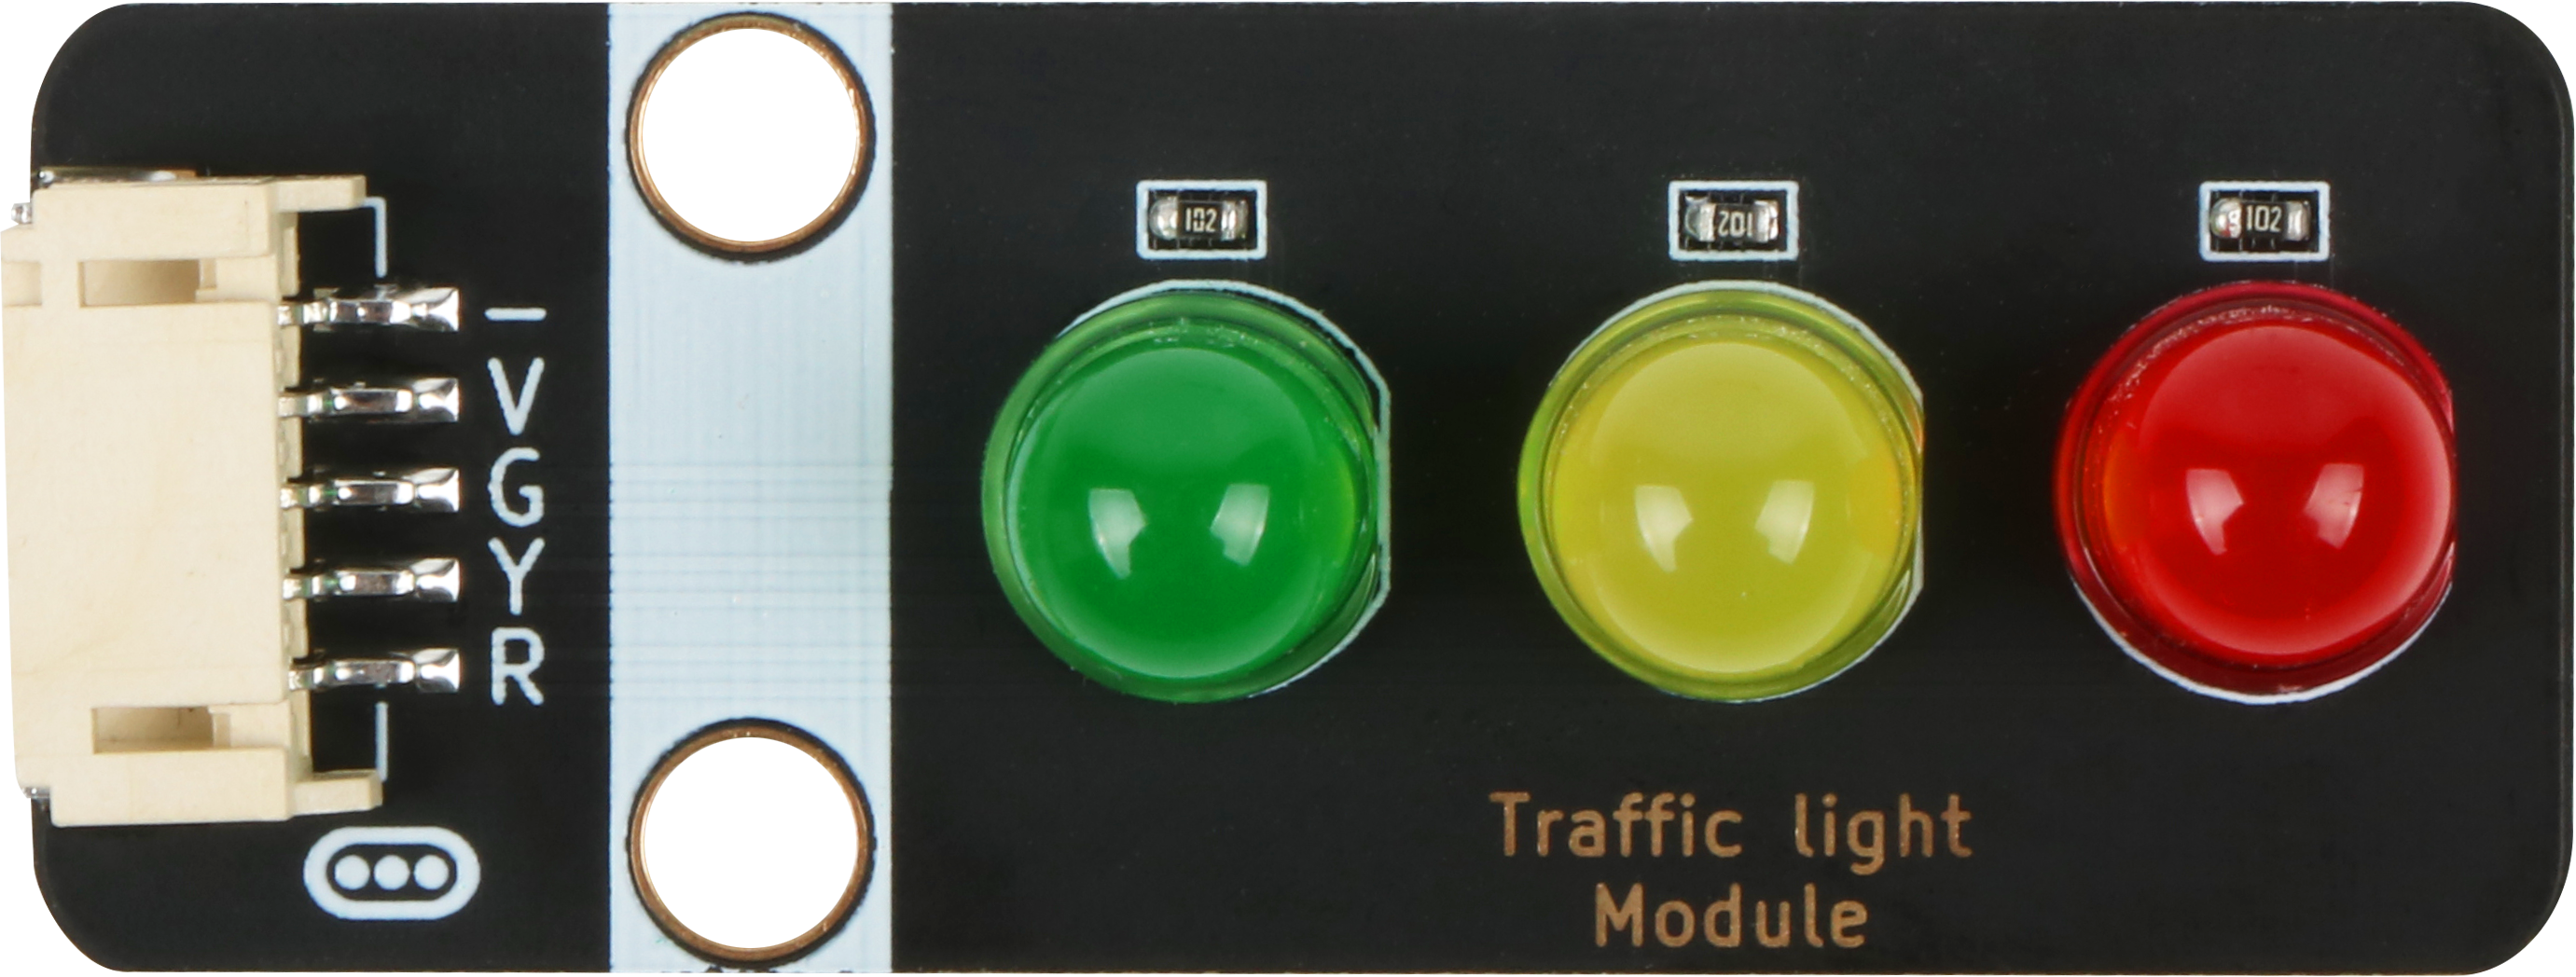 Traffic light Module